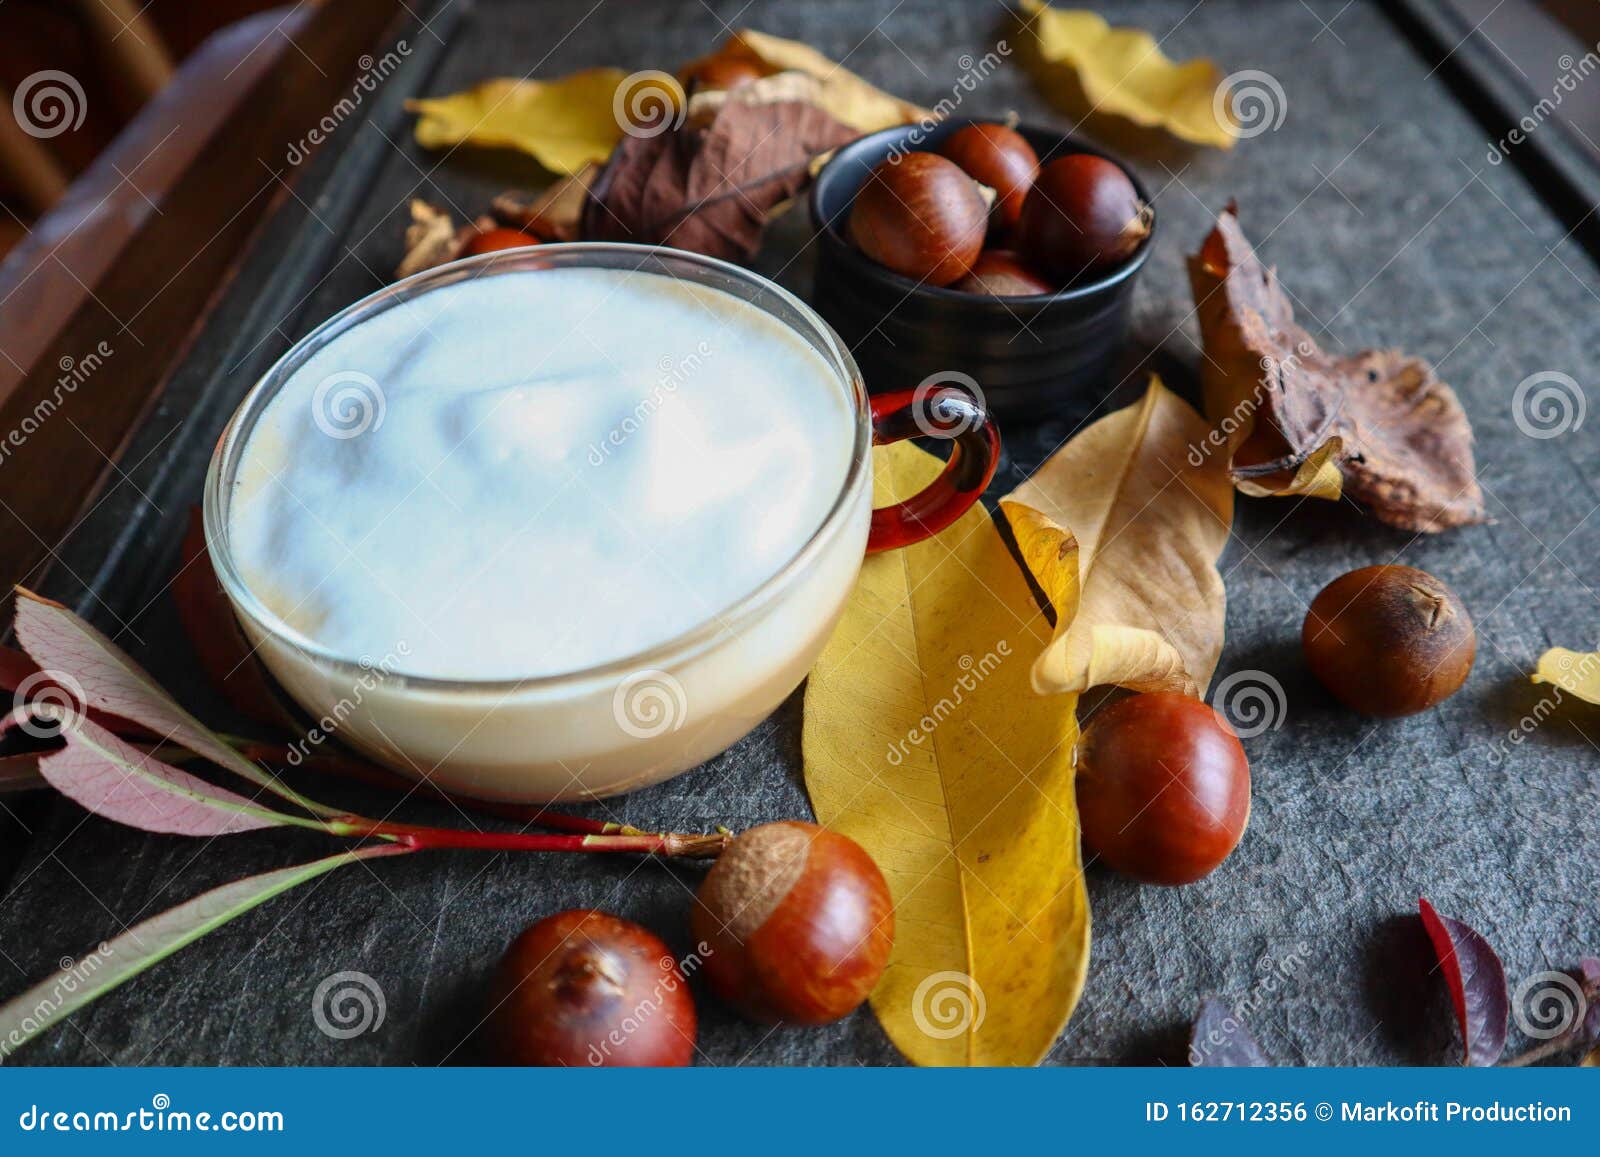 italian coffee with milk in autumn style